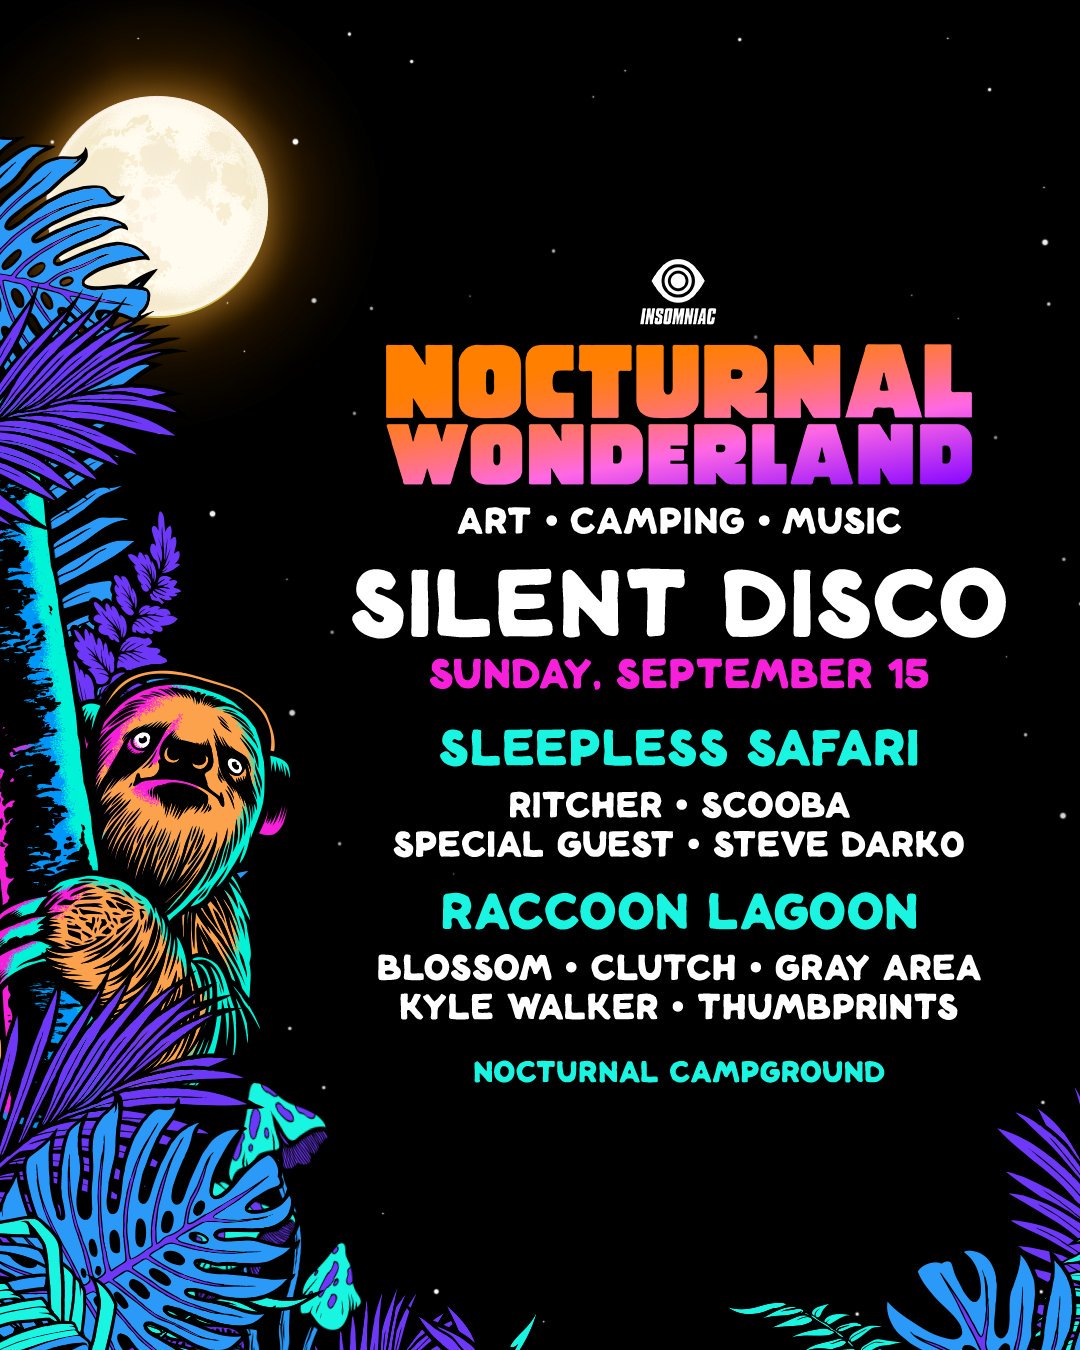 Nocturnal Wonderland 2019 Silent Disco Lineup